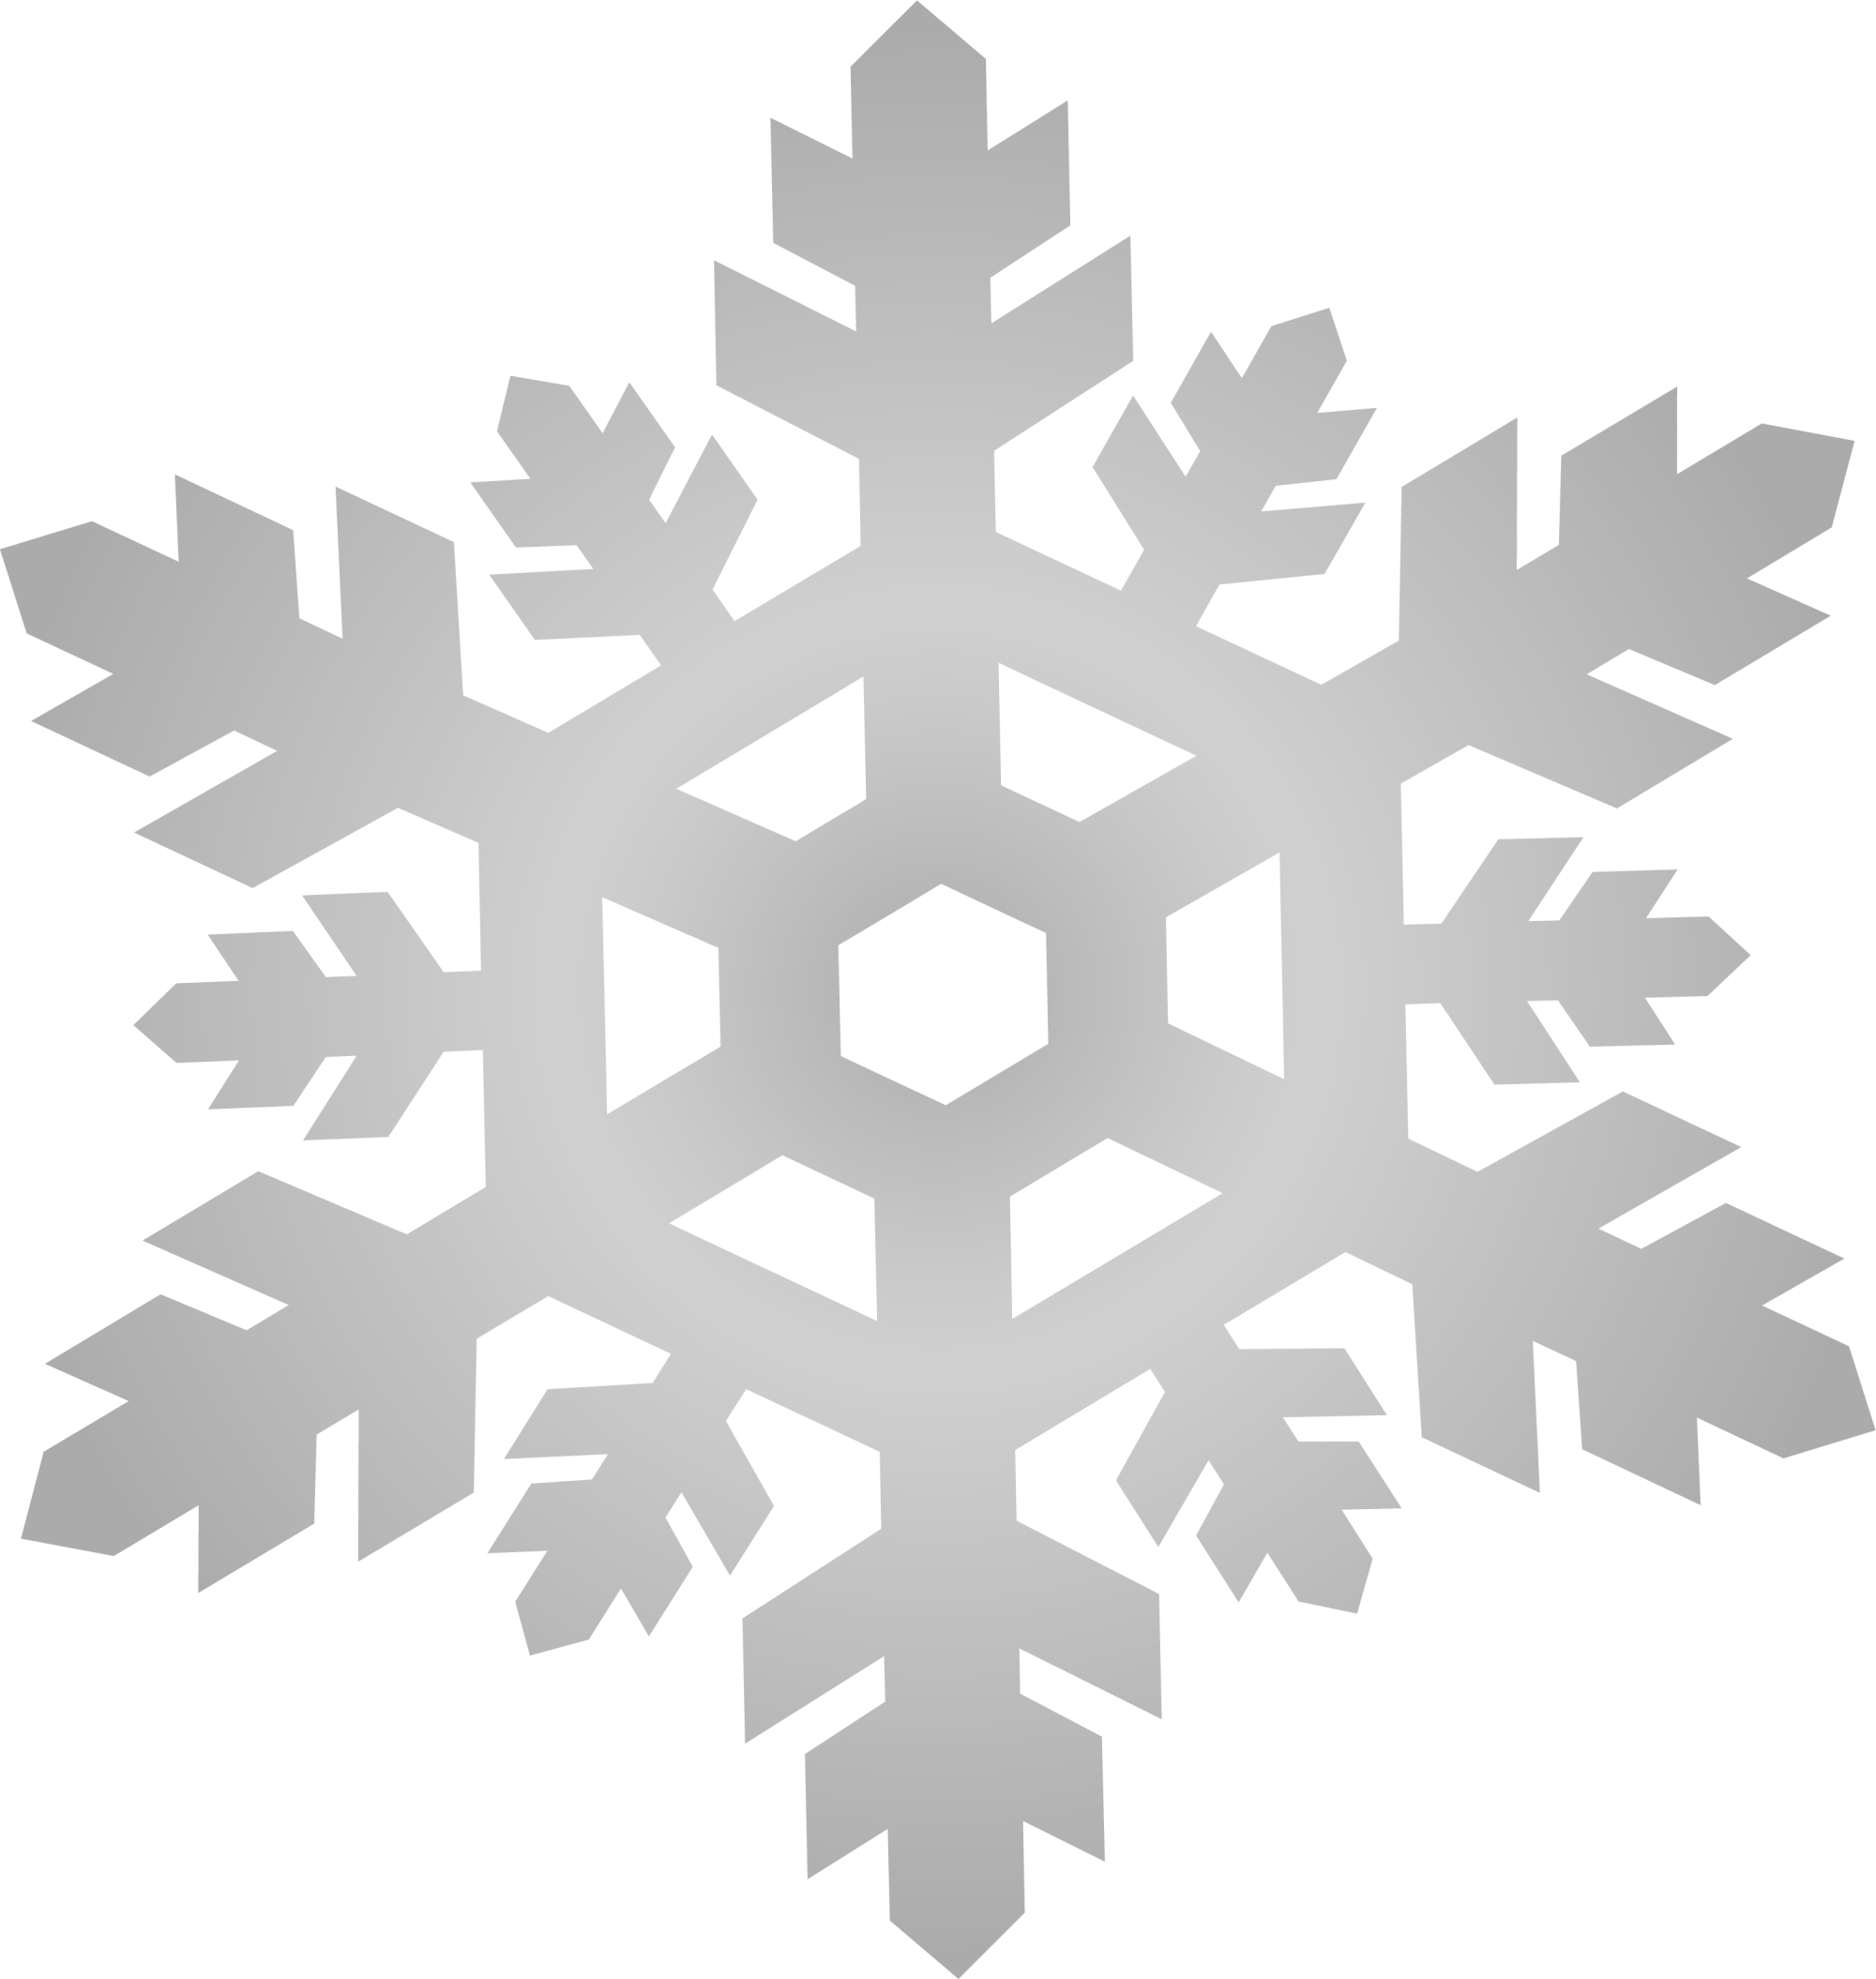 Autocad Computer File Gray Pattern Snowflake Dxf Free